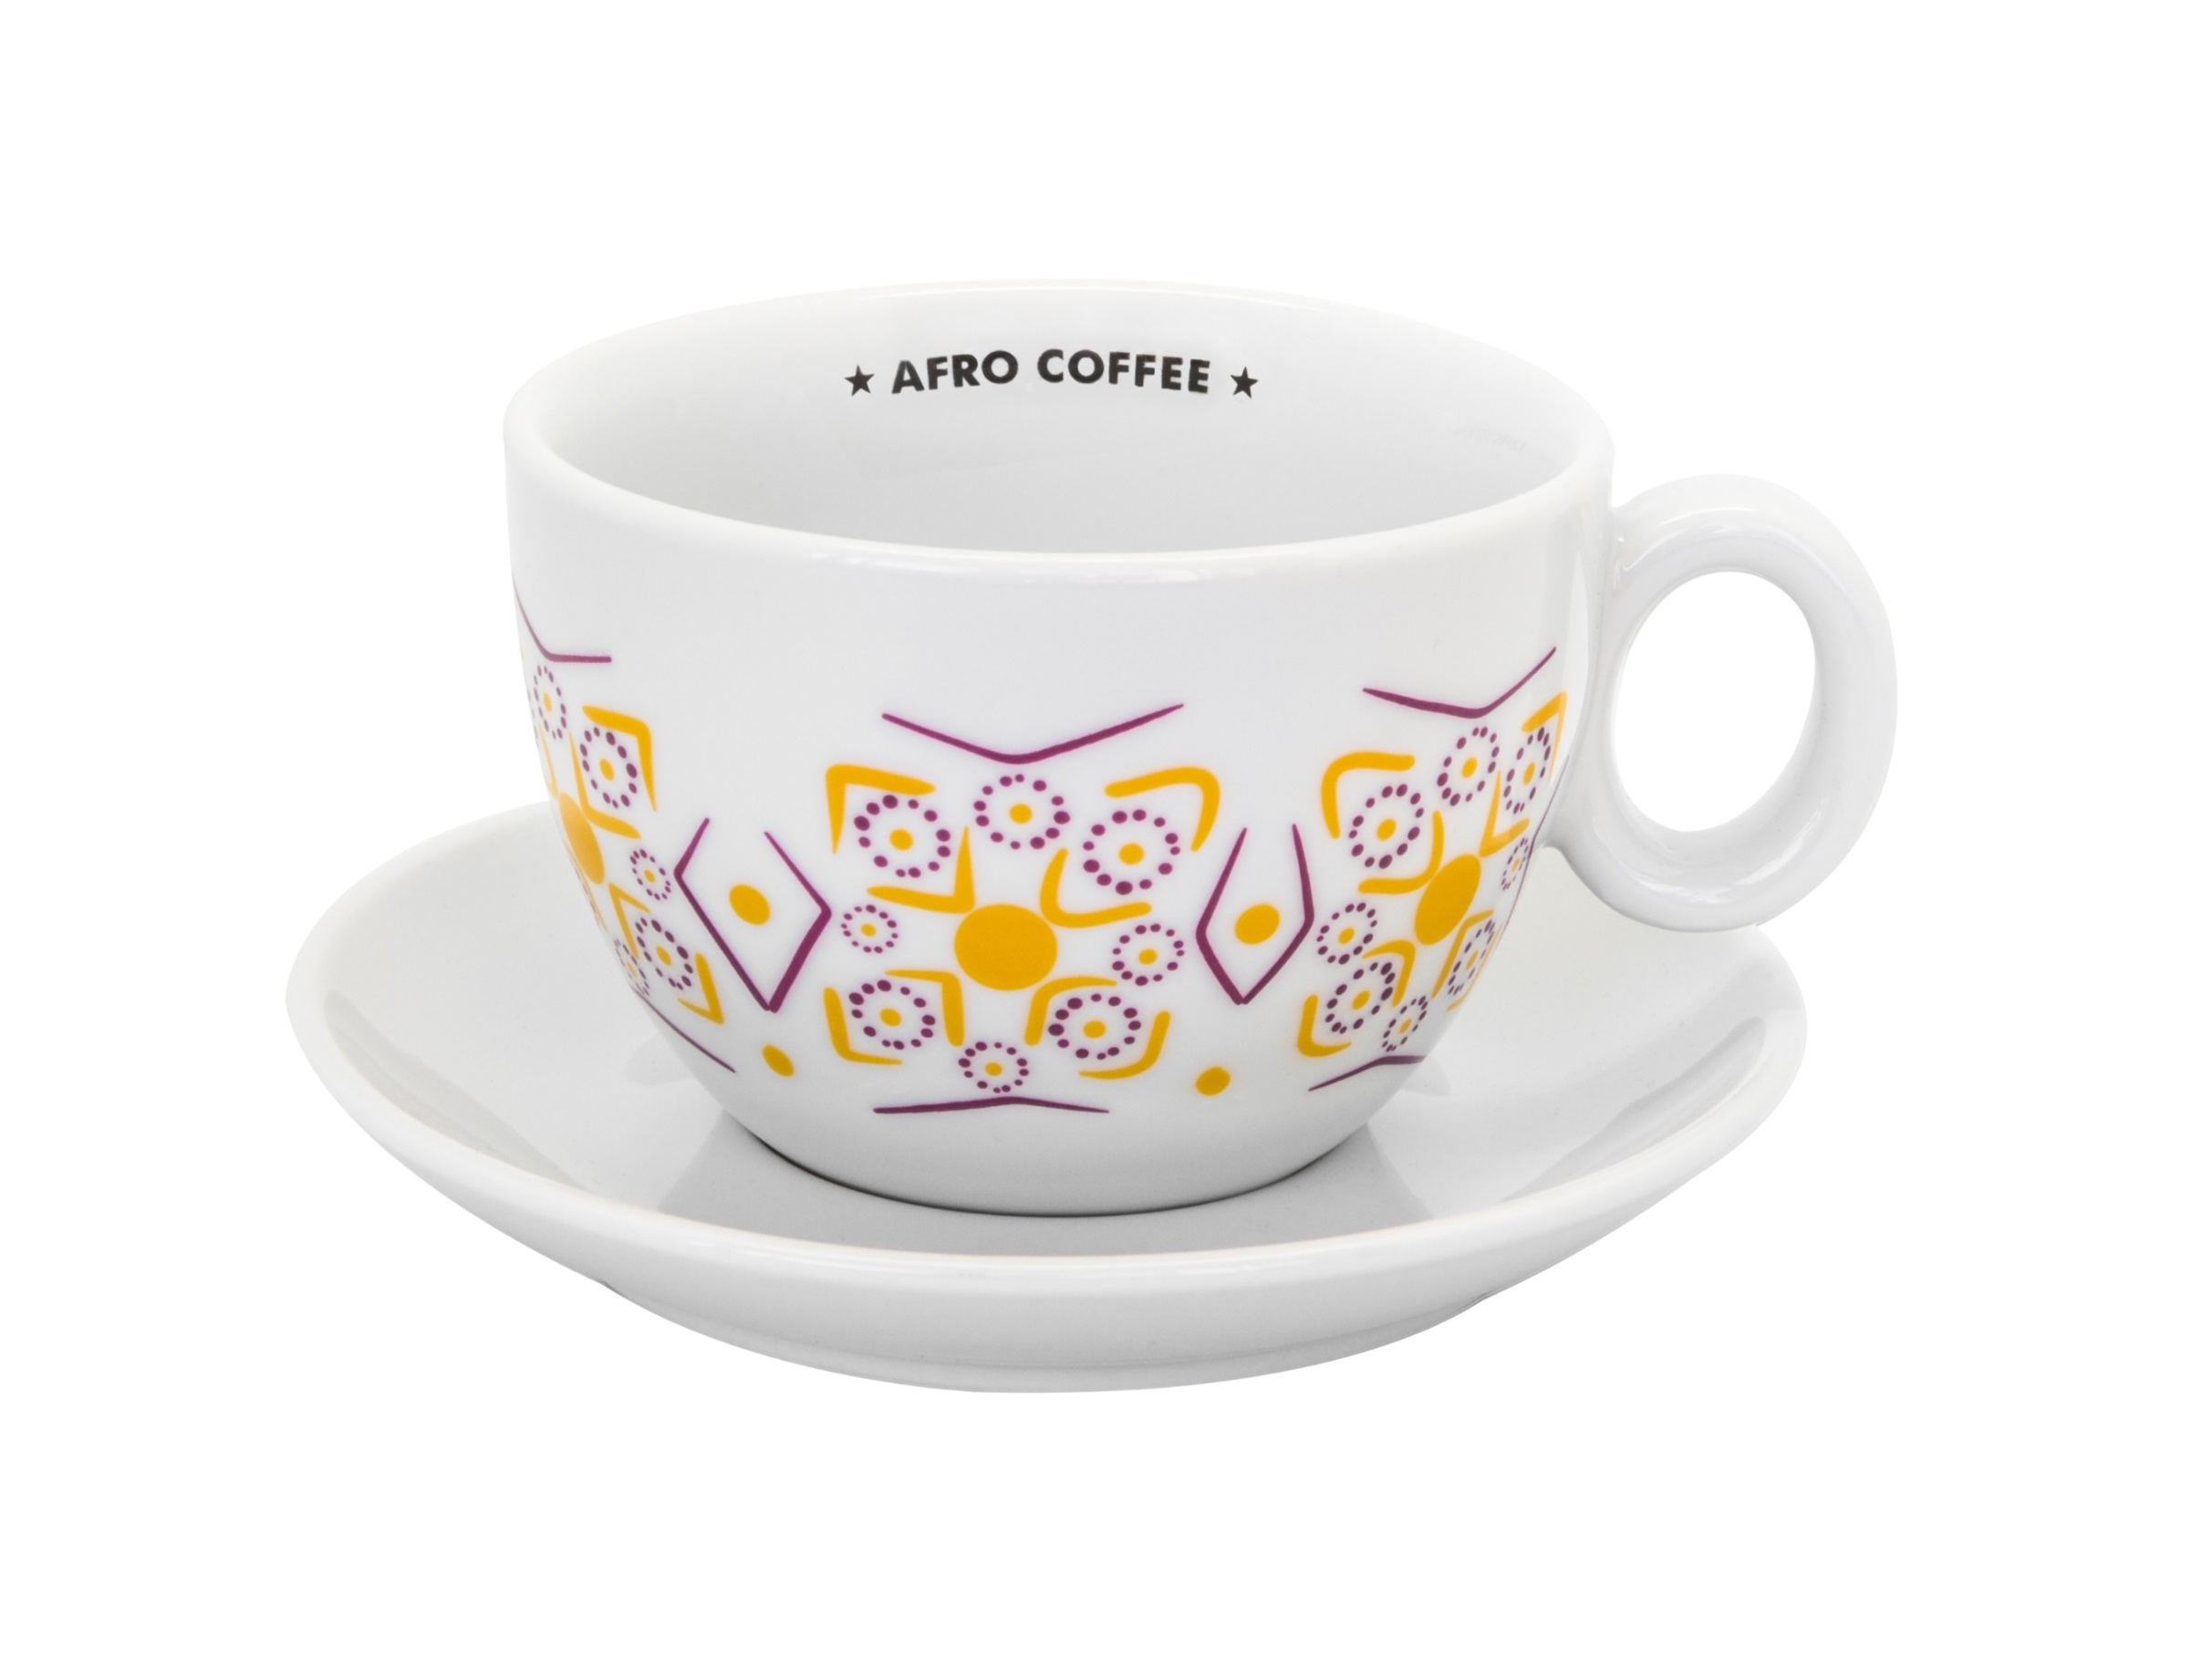 Cafe Latte Mug - XL, 2nd edition